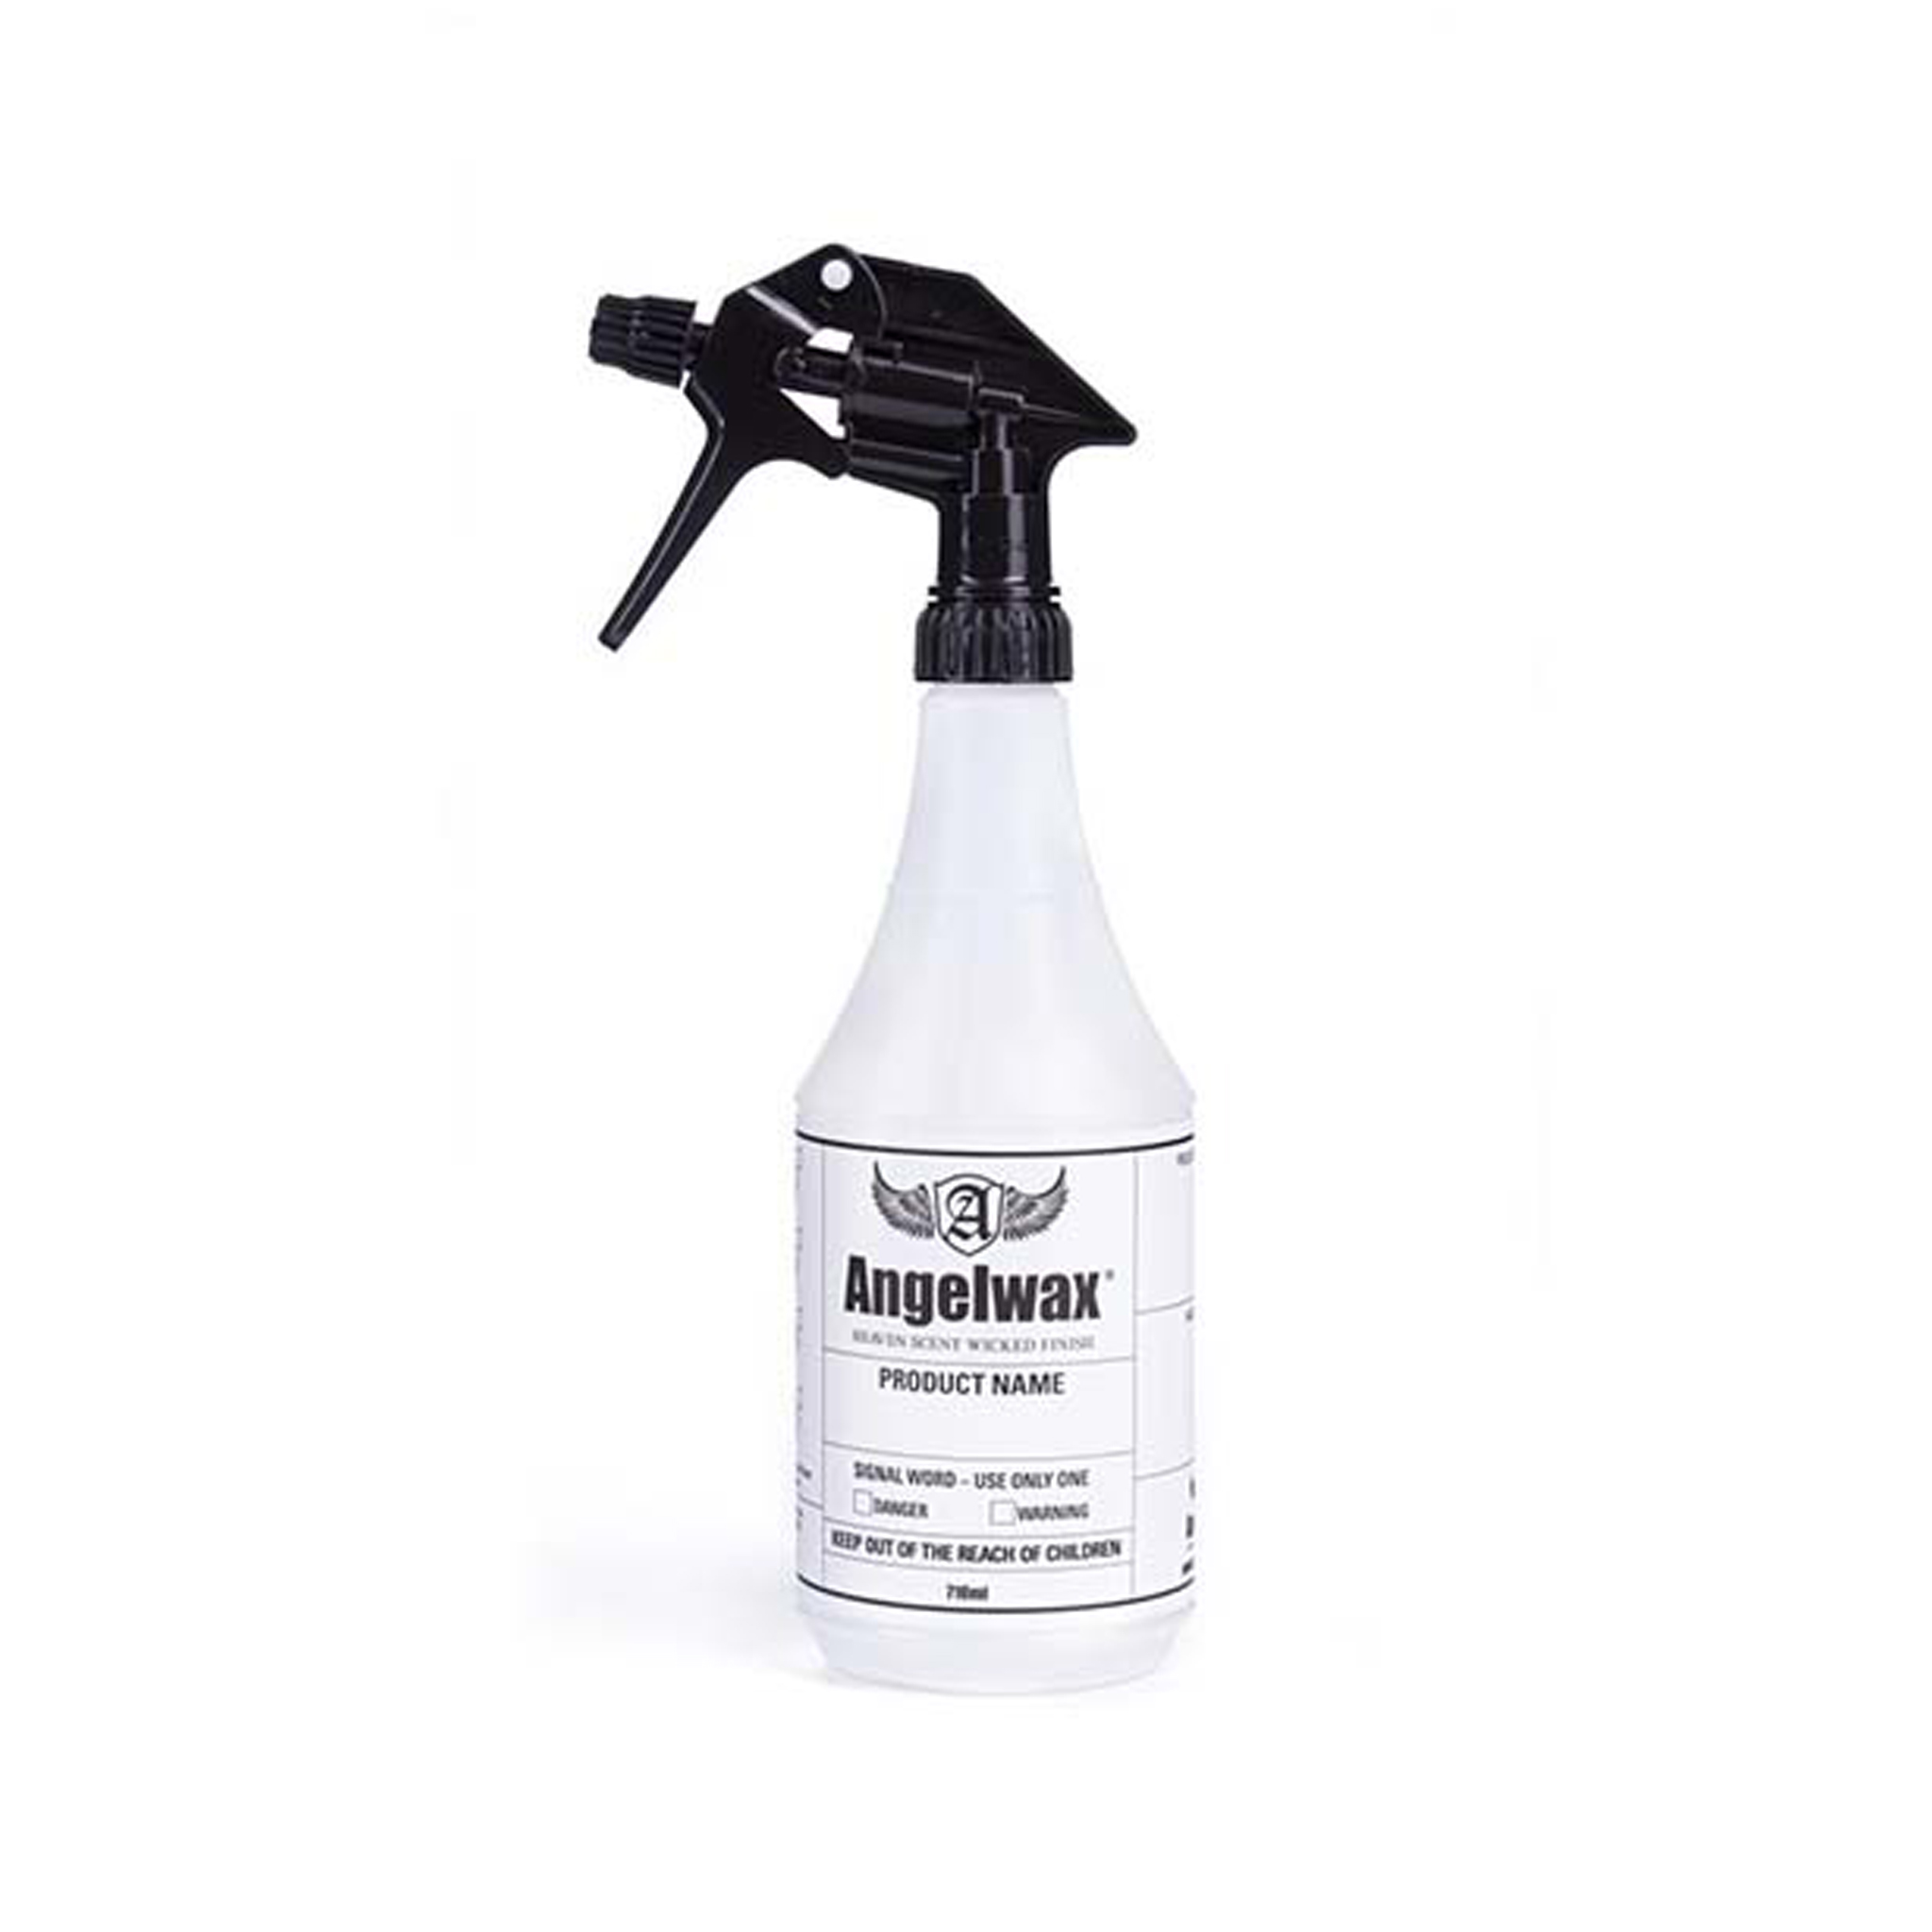 Angelwax - Chemical Resistant Heavy-Duty Bottle & Sprayer